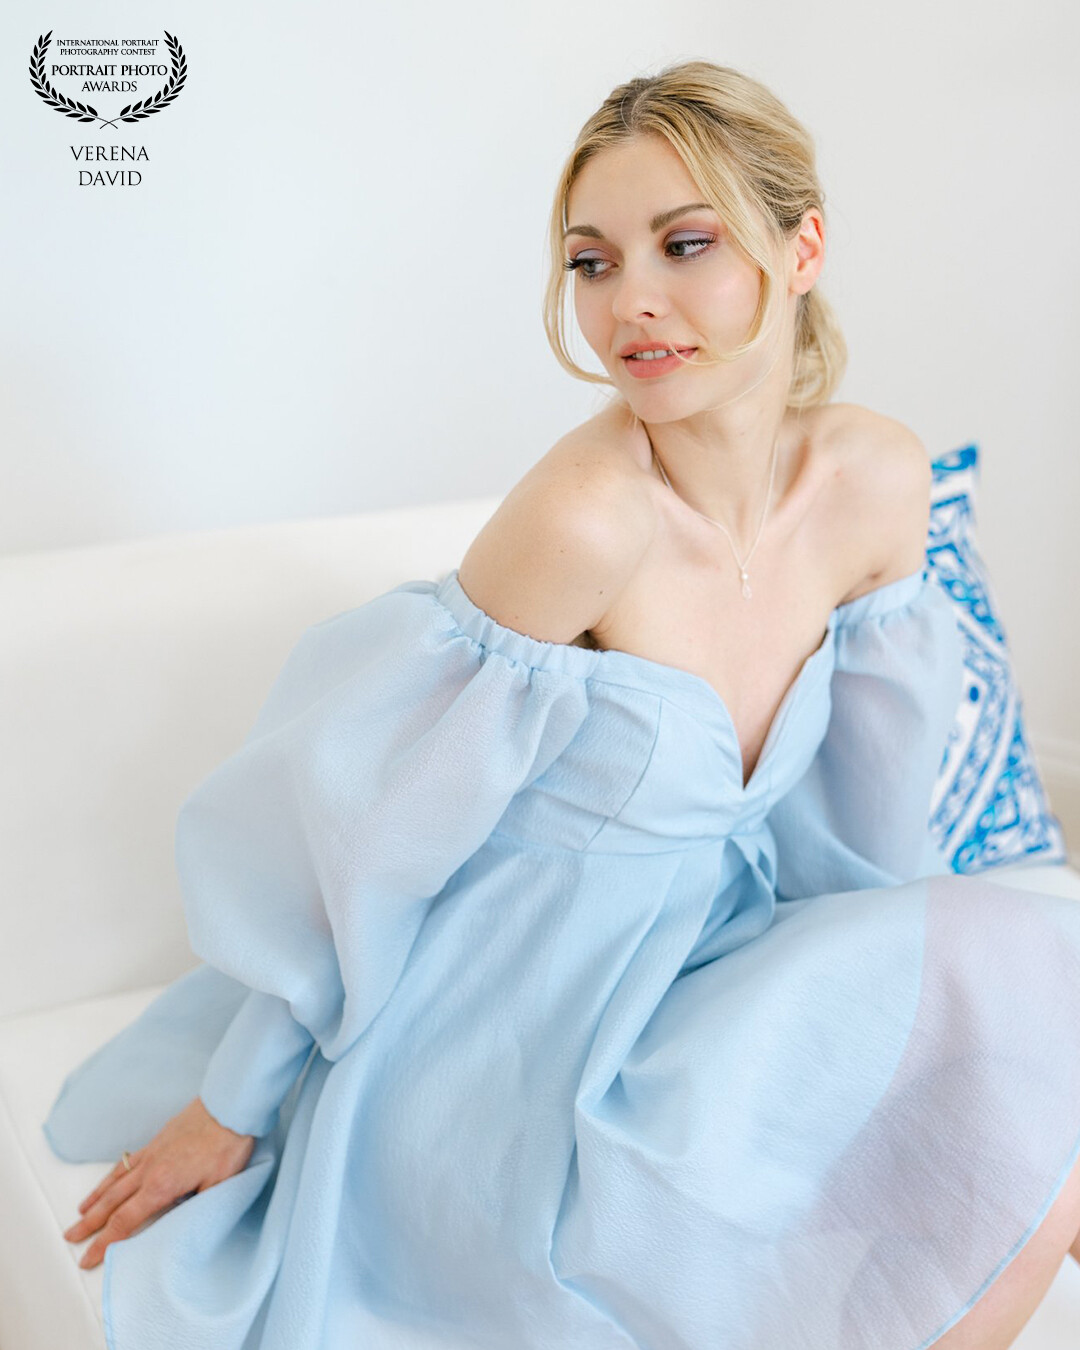 Cinderella inspired engagement shooting<br />
<br />
Picture of the bride to be in a lovely light blue dress. <br />
<br />
Thanks to the team:<br />
Organisation @rosenquartzphoto / @heavenandroses_ <br />
Wedding Planner & Decor @suzeweddingsfrankfurt <br />
Models @heavenandu<br />
Makeup @jasmins_makeupwelt <br />
Flowers @adam_und_efeu  <br />
Cake @melocake0 <br />
Stationery @glueckaufpapier<br />
Macaroons @seidenzucker<br />
Stying Mat, Vow booklets, Polymer Clay Earrings @marryandlilo<br />
Fine Jewlery @juvelan<br />
Wedding Rings verspoor_trauringe<br />
Furniture Rental @partyrentfrankfurt<br />
Clear Stand @cilimana_deko_frankfurt